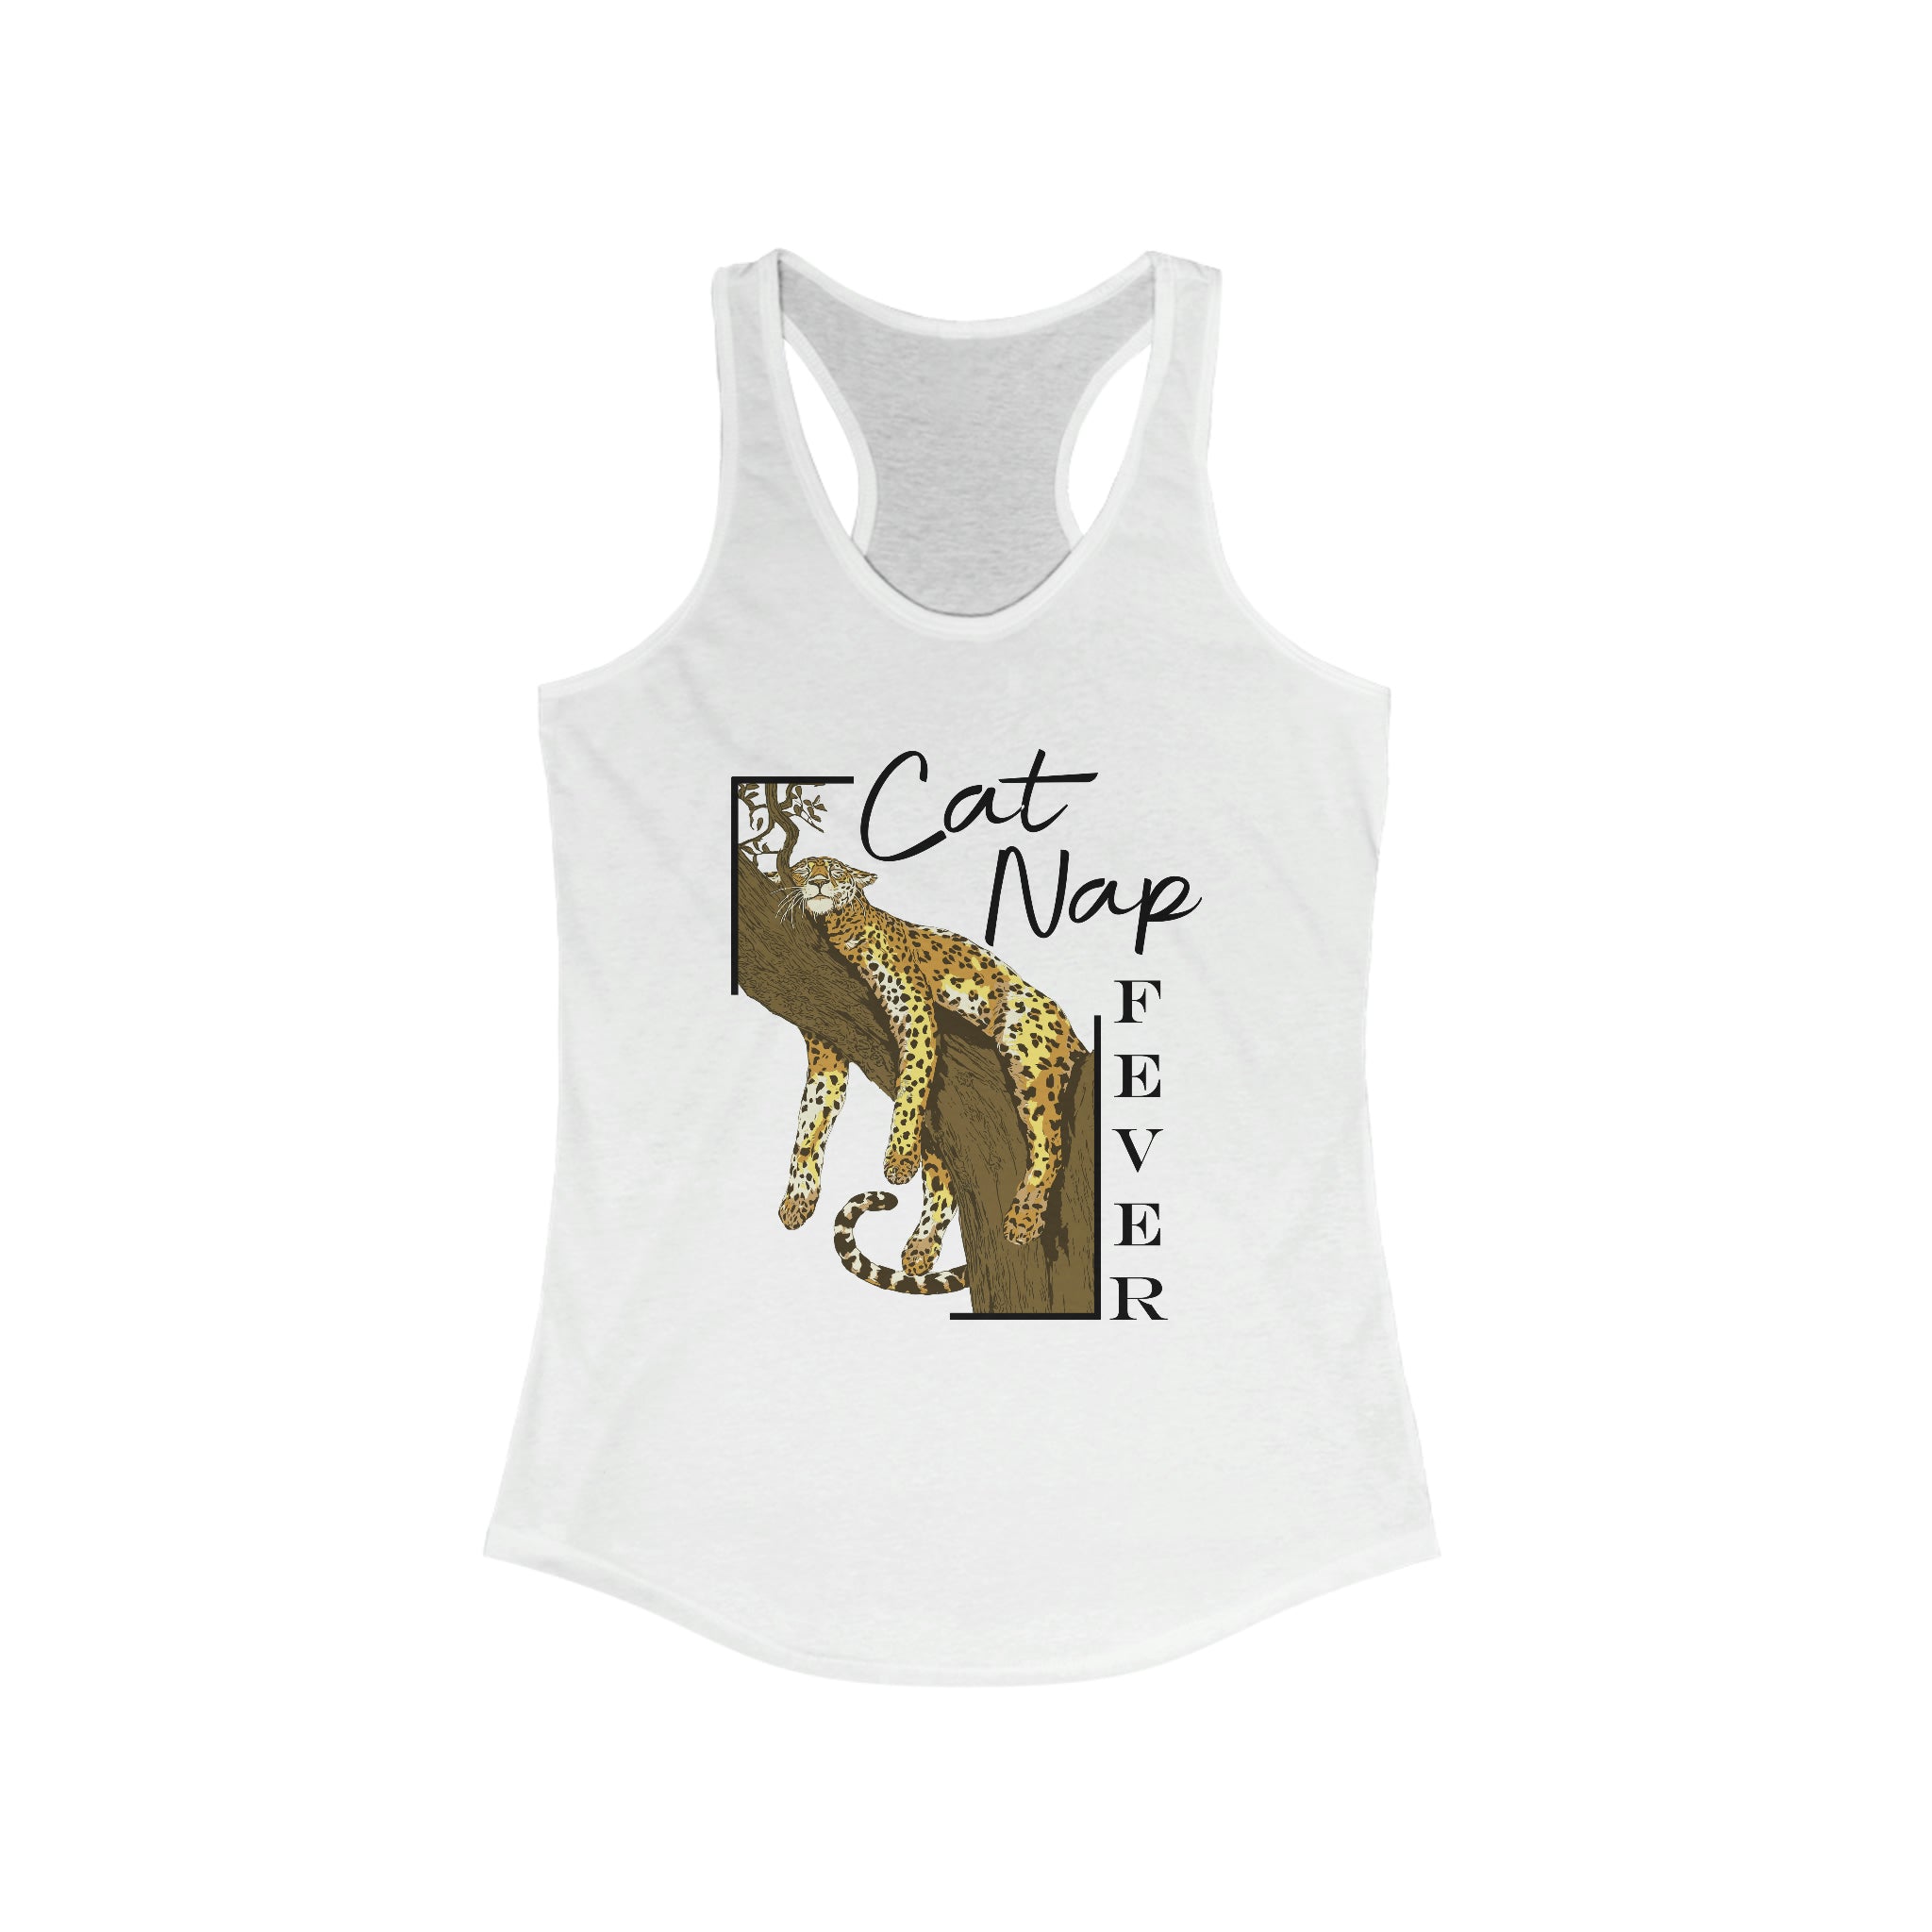 Cat Tank Top, Big Cat Shirt, Leopard Shirt, Cute Cat Shirt, Cat